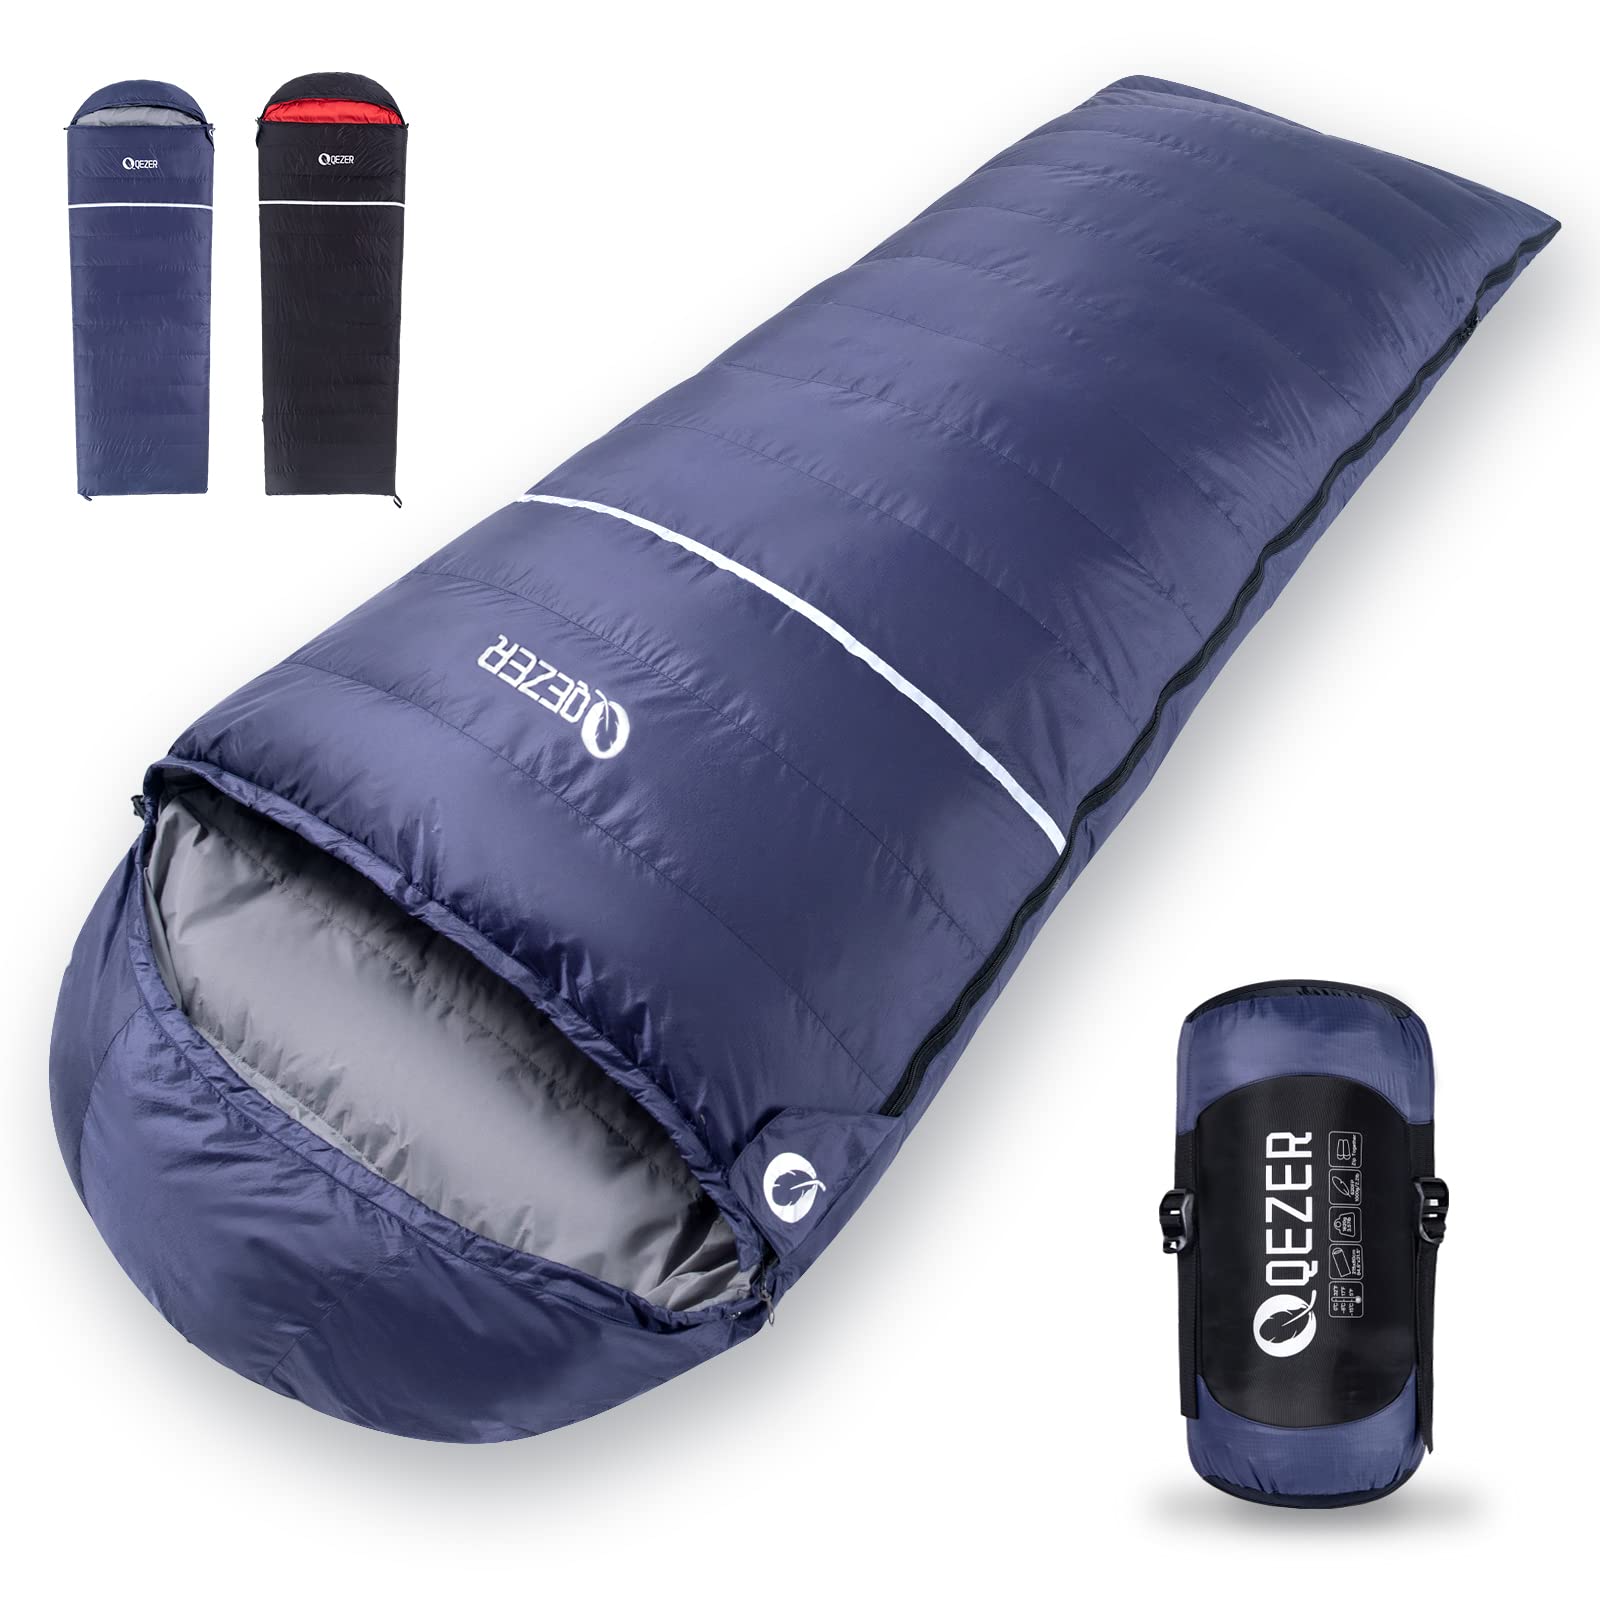 QEZER Down Sleeping Bag for Adults 0 Degree Sleeping Bag 600 Fill Power Cold Weather Sleeping Bag Ultralight Sleeping Bag wit